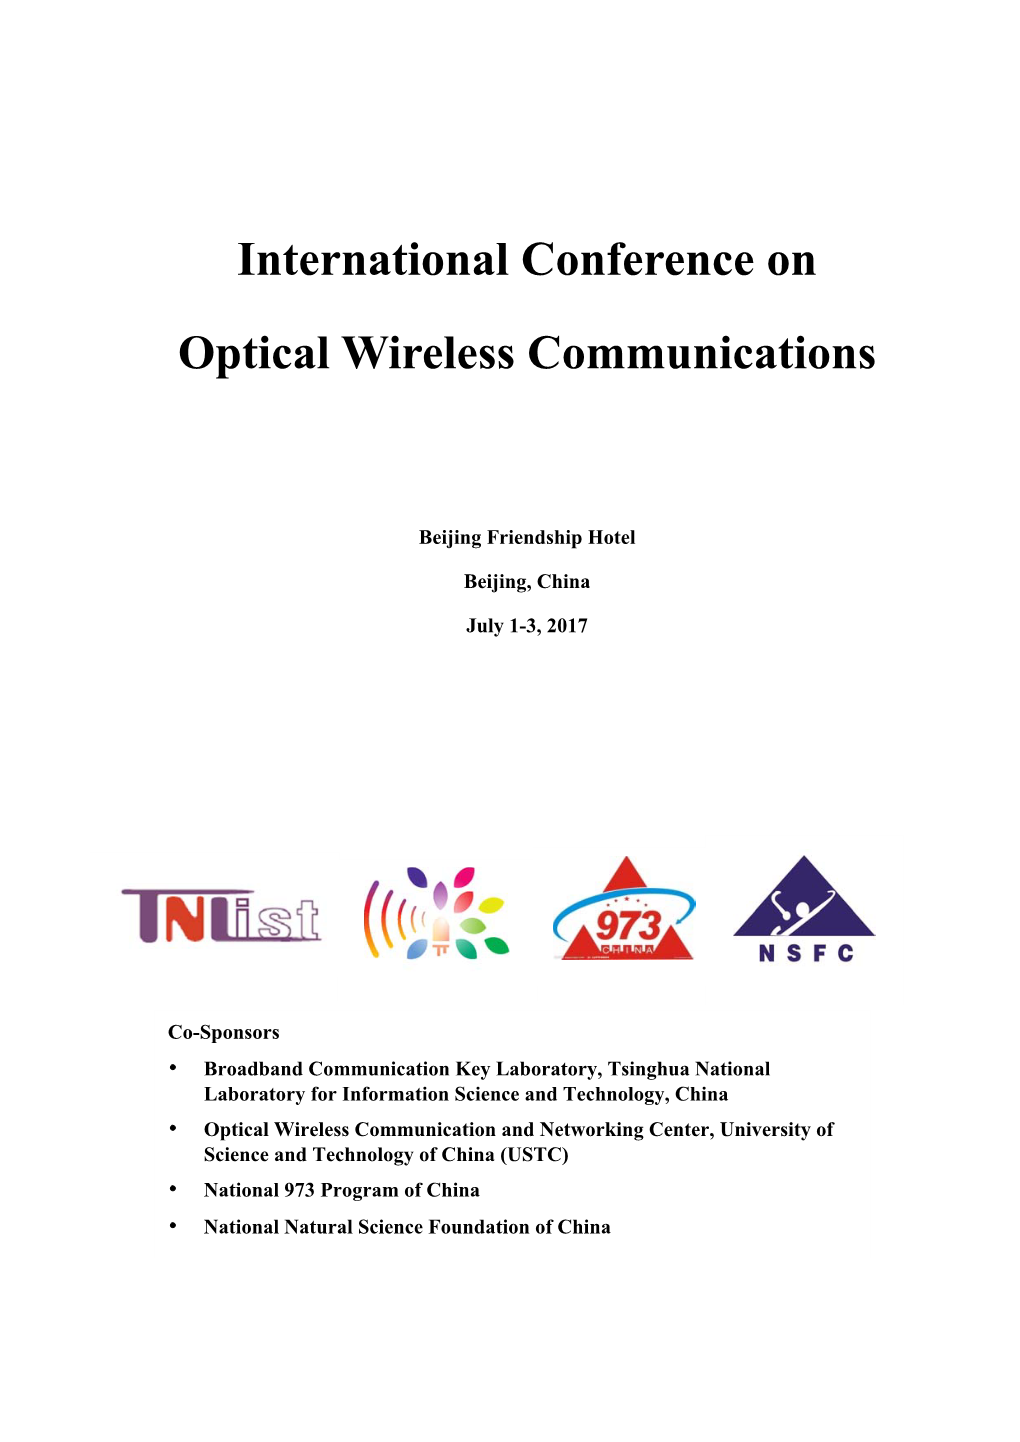 International Conference on Optical Wireless Communications